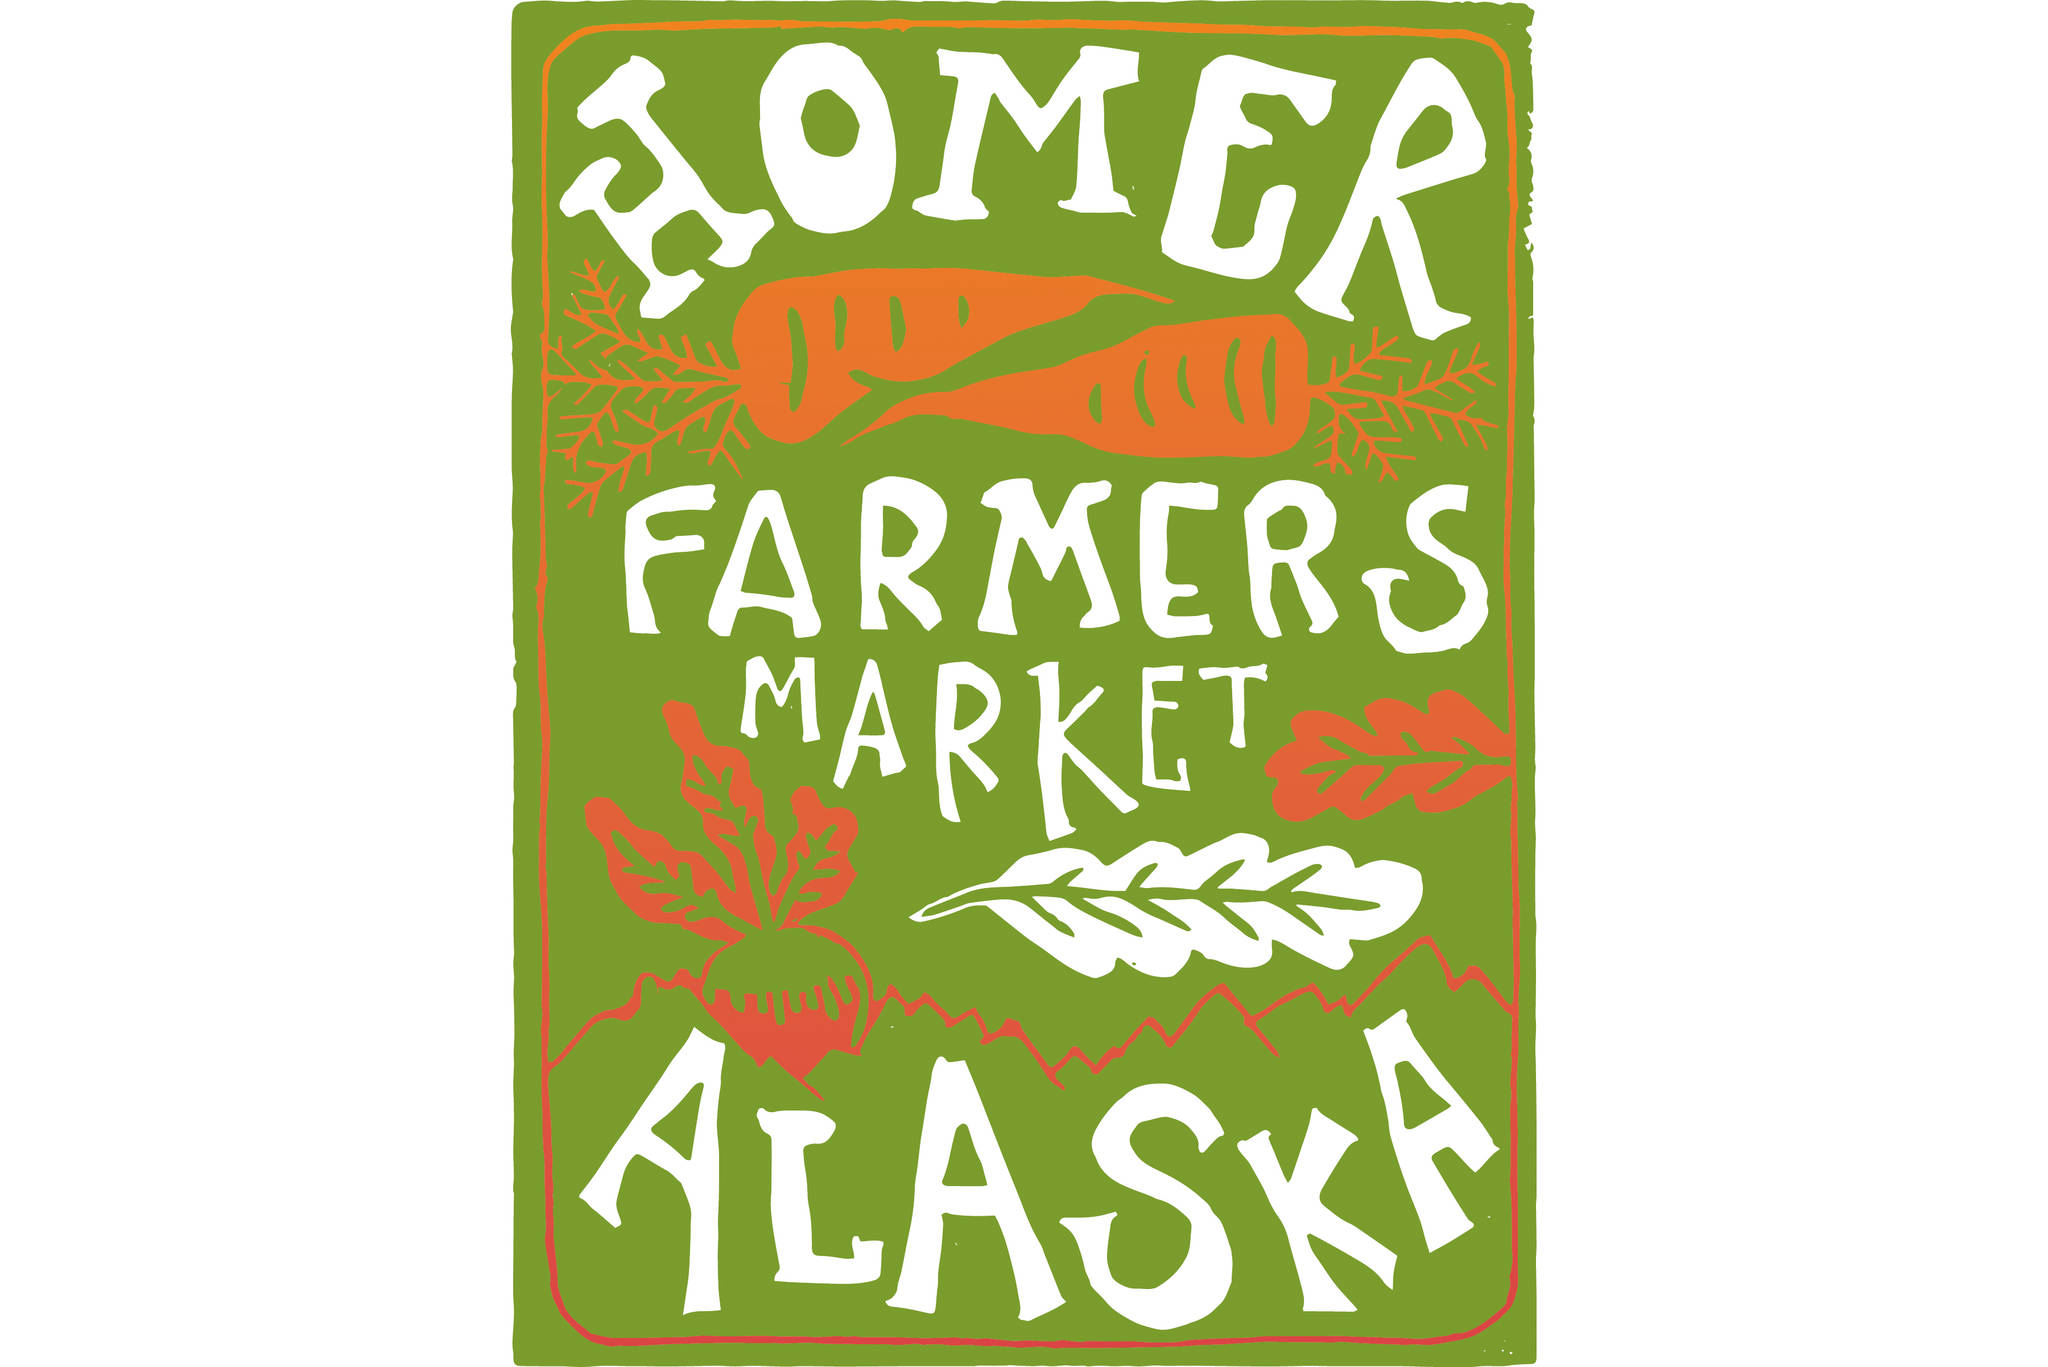 Homer Farmers Market: Celebrating 20 years